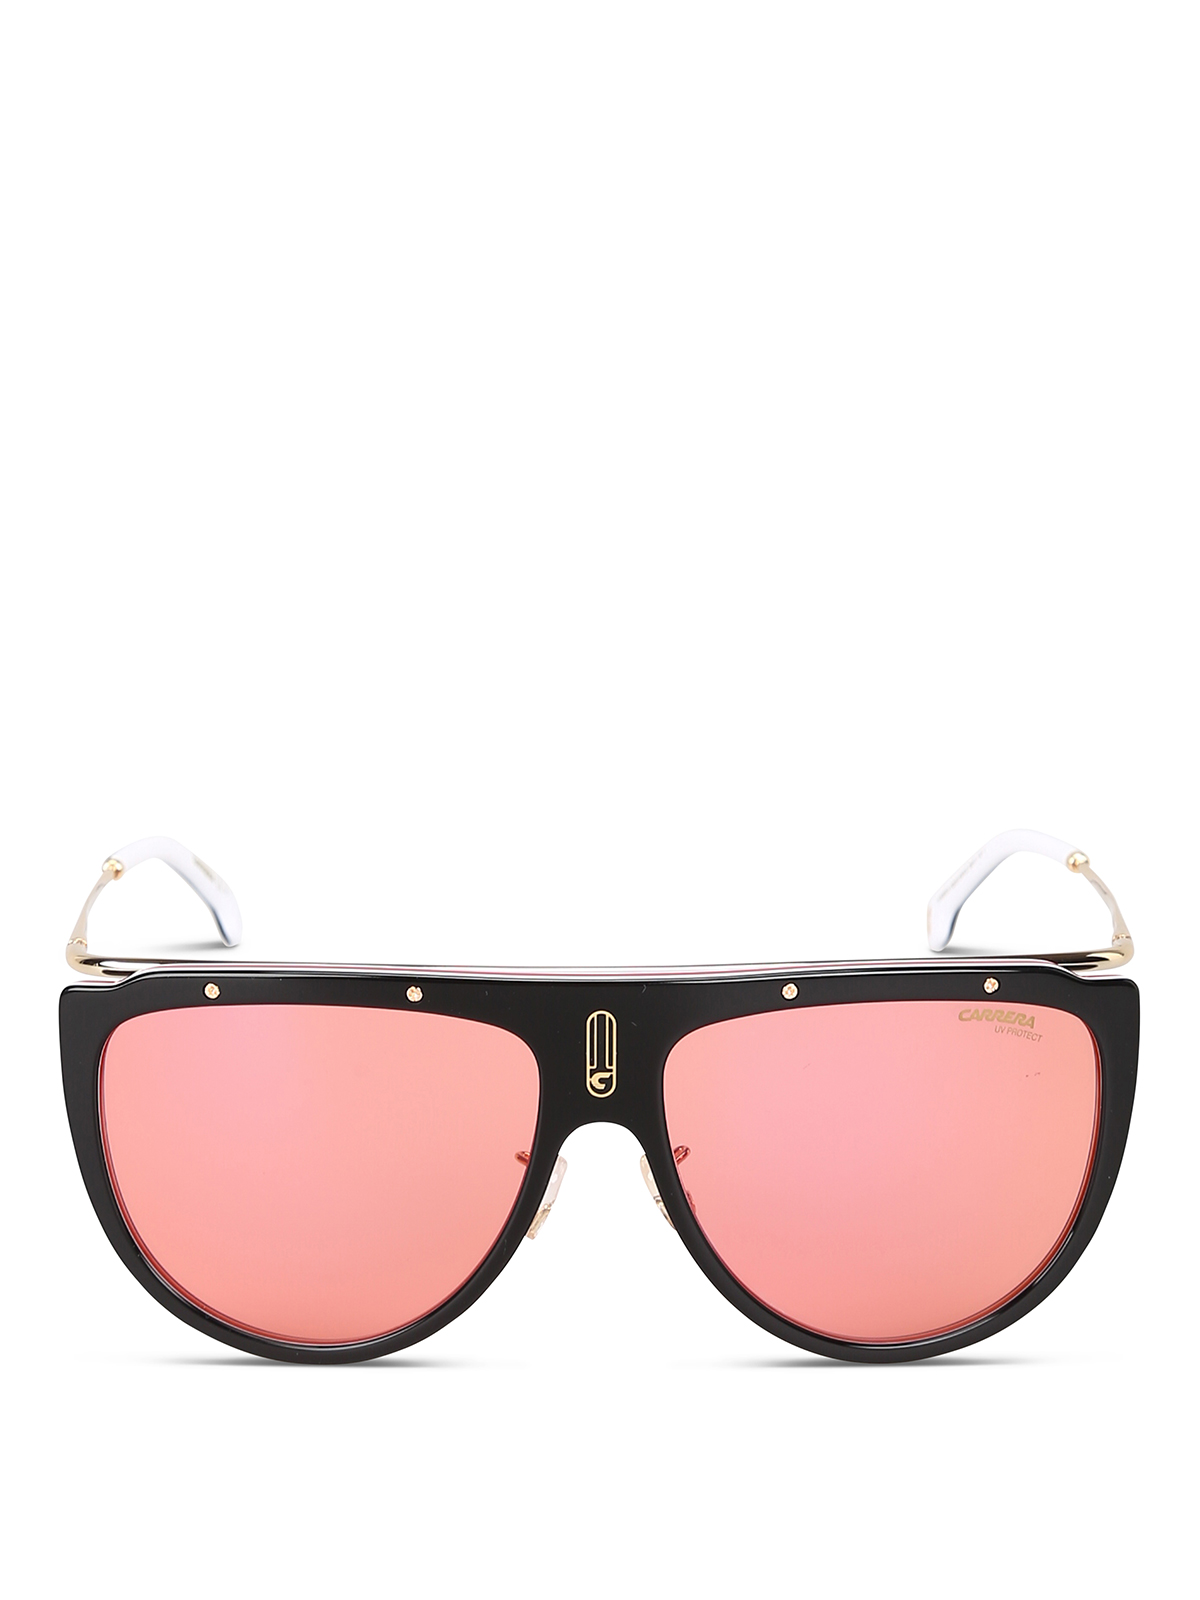 Sunglasses Carrera - Black sunglasses with pink lenses - CARRERA1023SWR7UZ